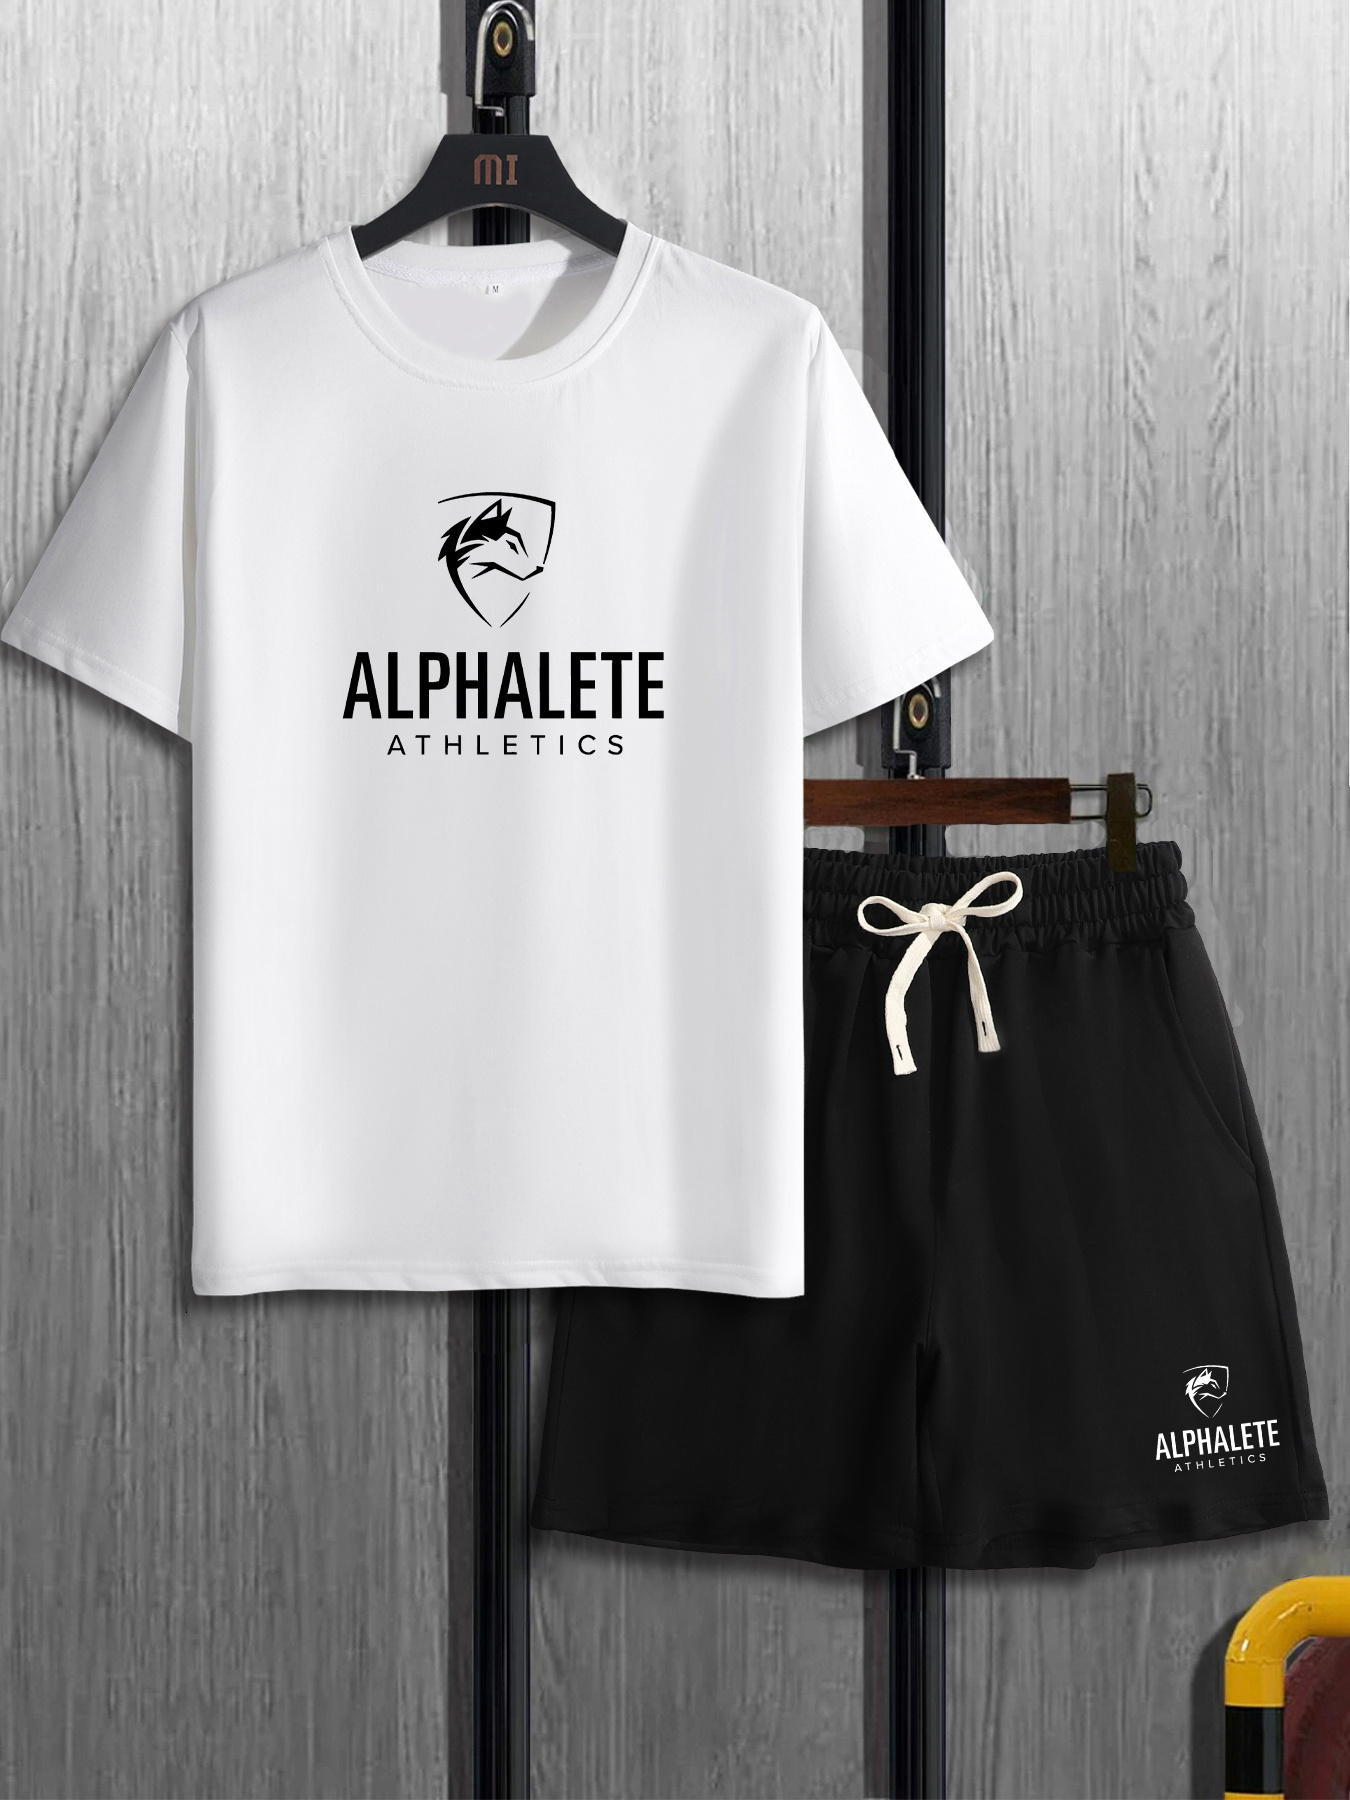 Collections – Alphalete Athletics